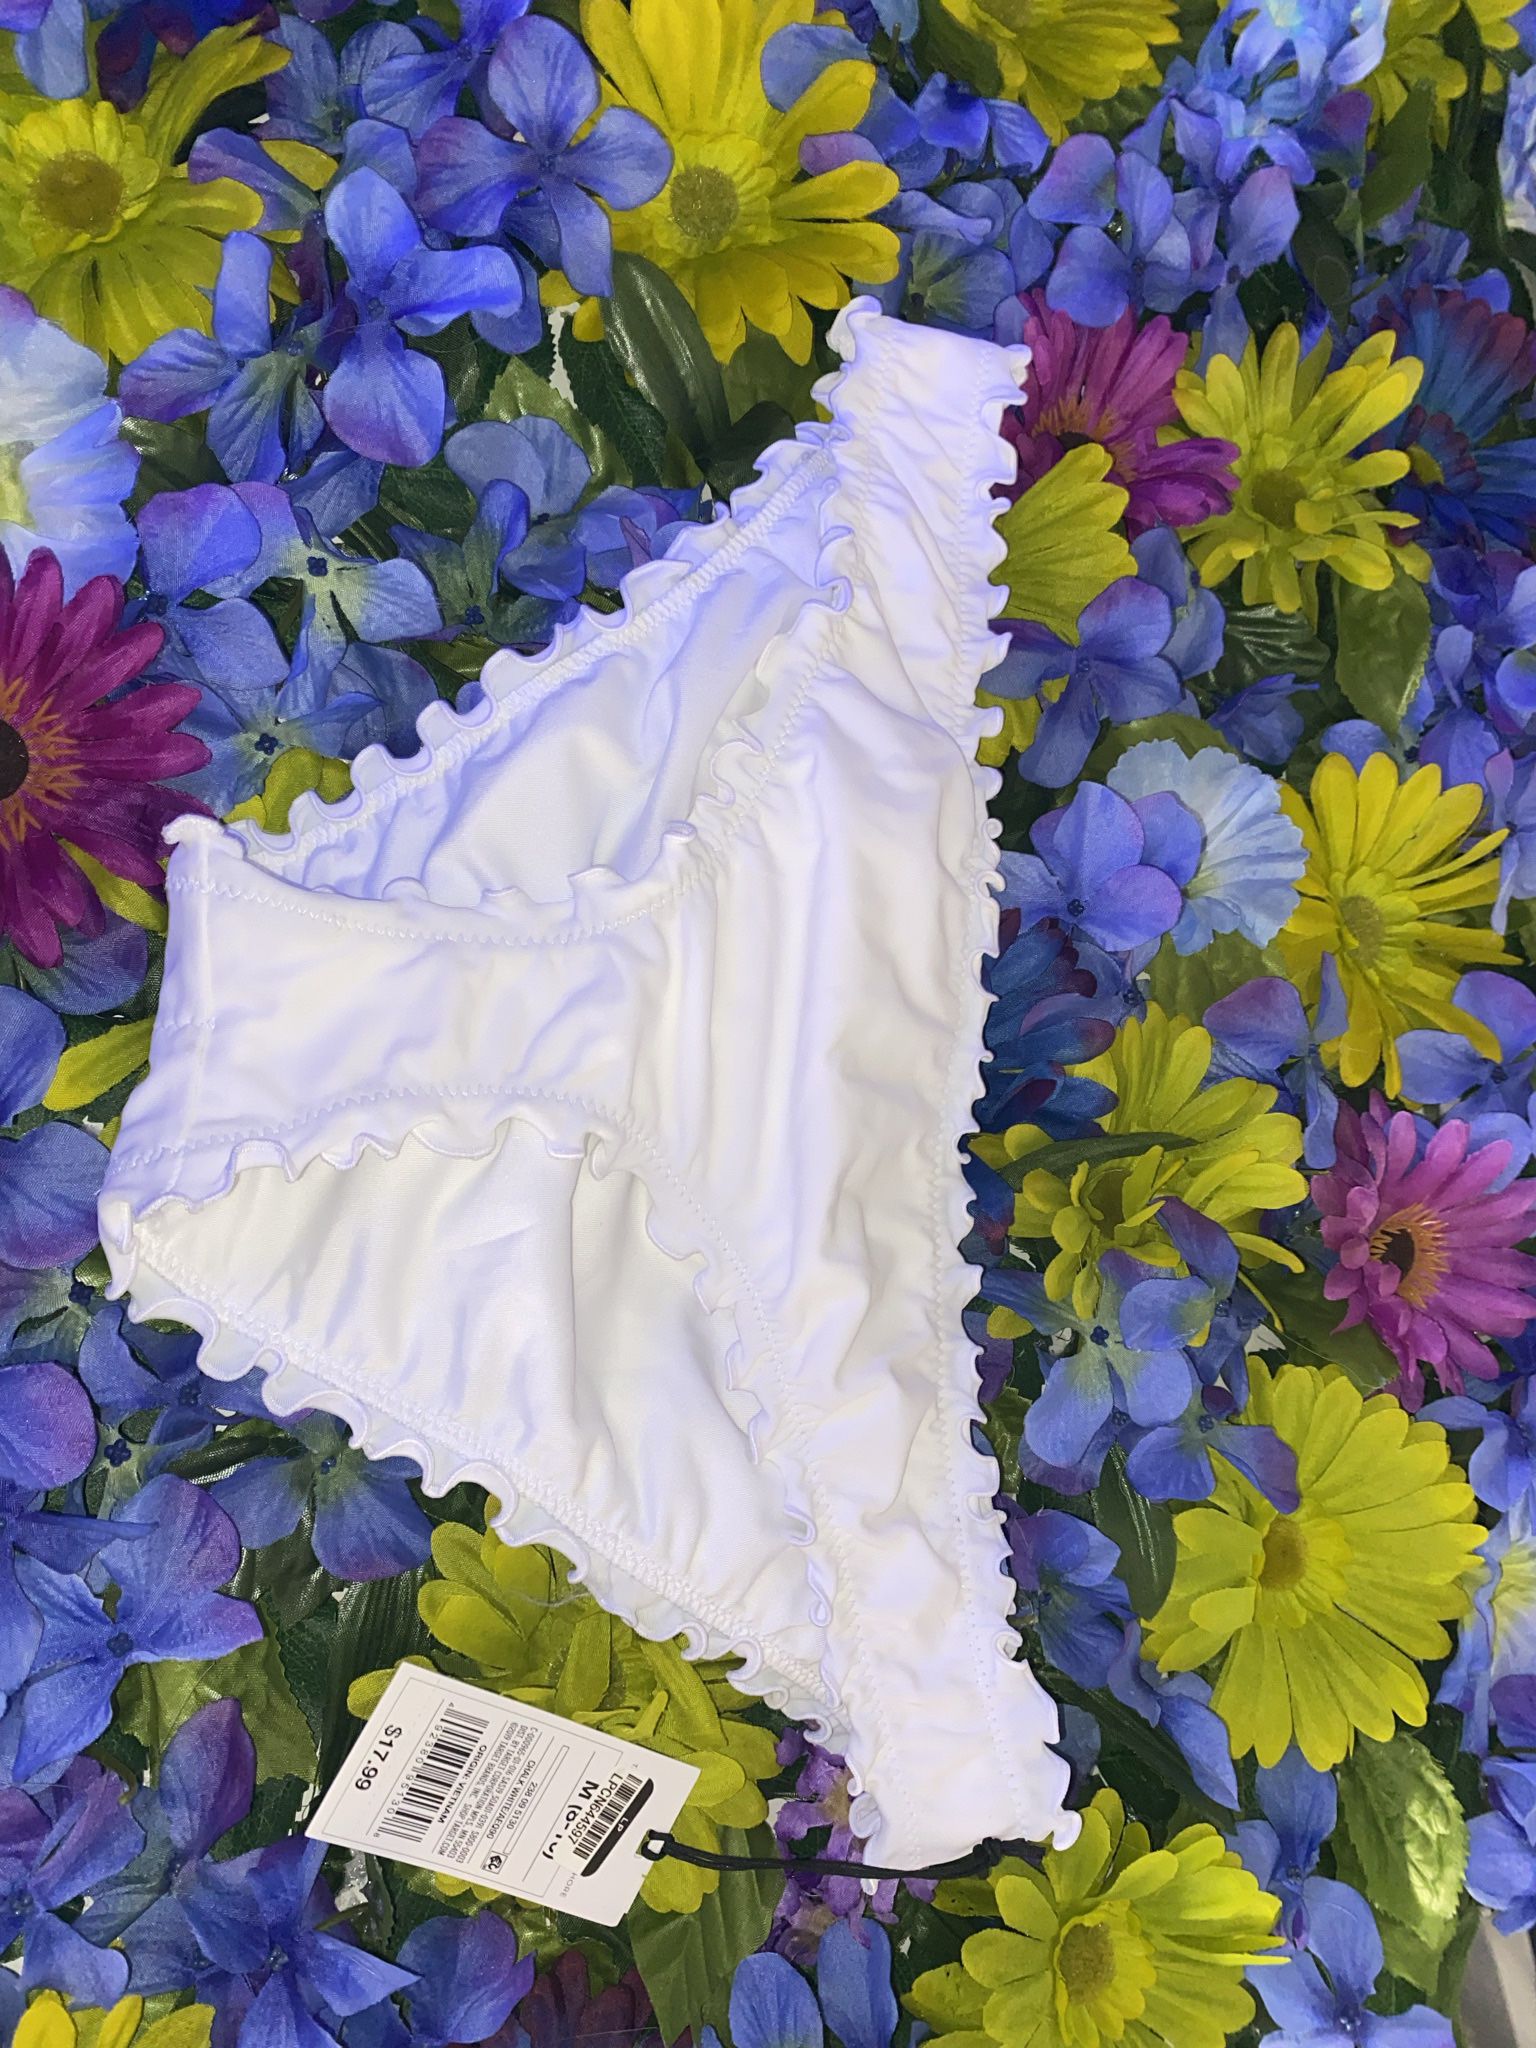 BNWT M Shade & Shore White Bikini Bottoms M $17.99 Retail